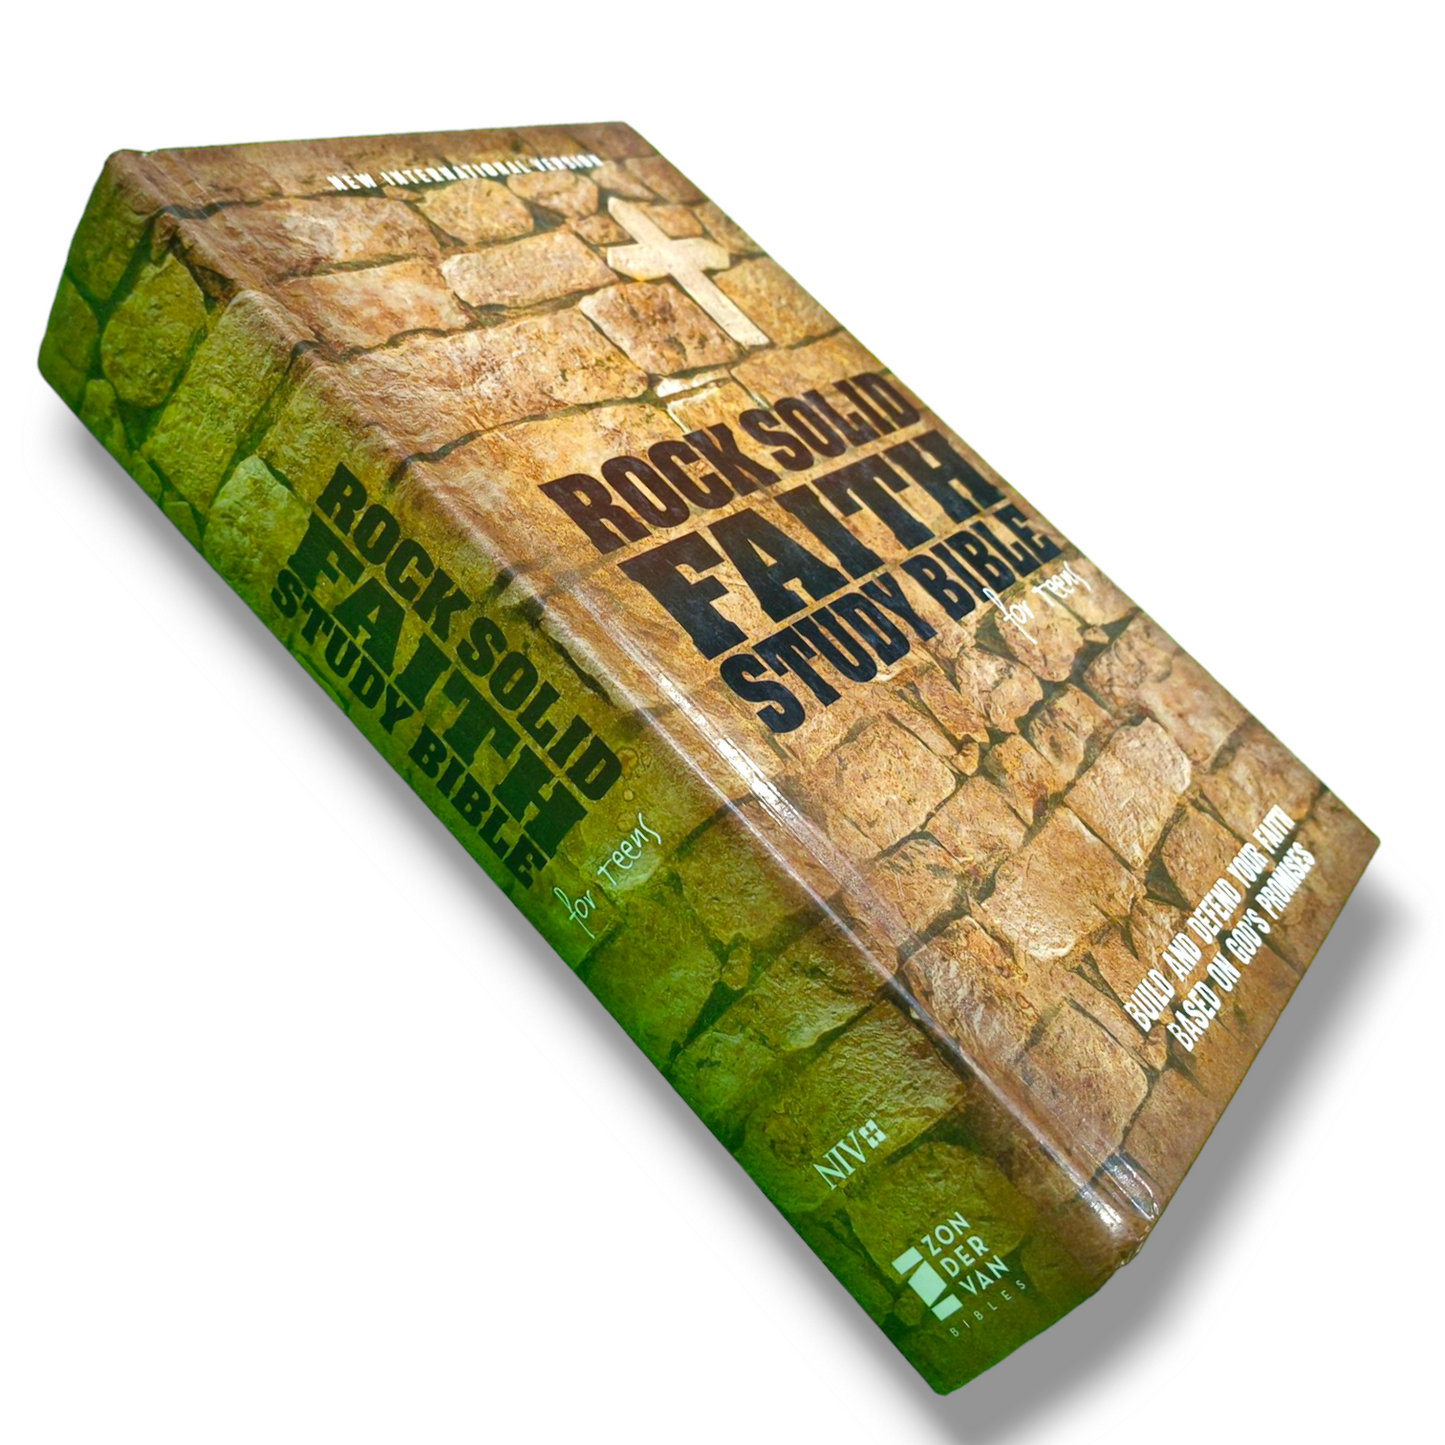 NIV Rock Solid Faith Bible | Study Bible | Hard Bound Edition | New Edition